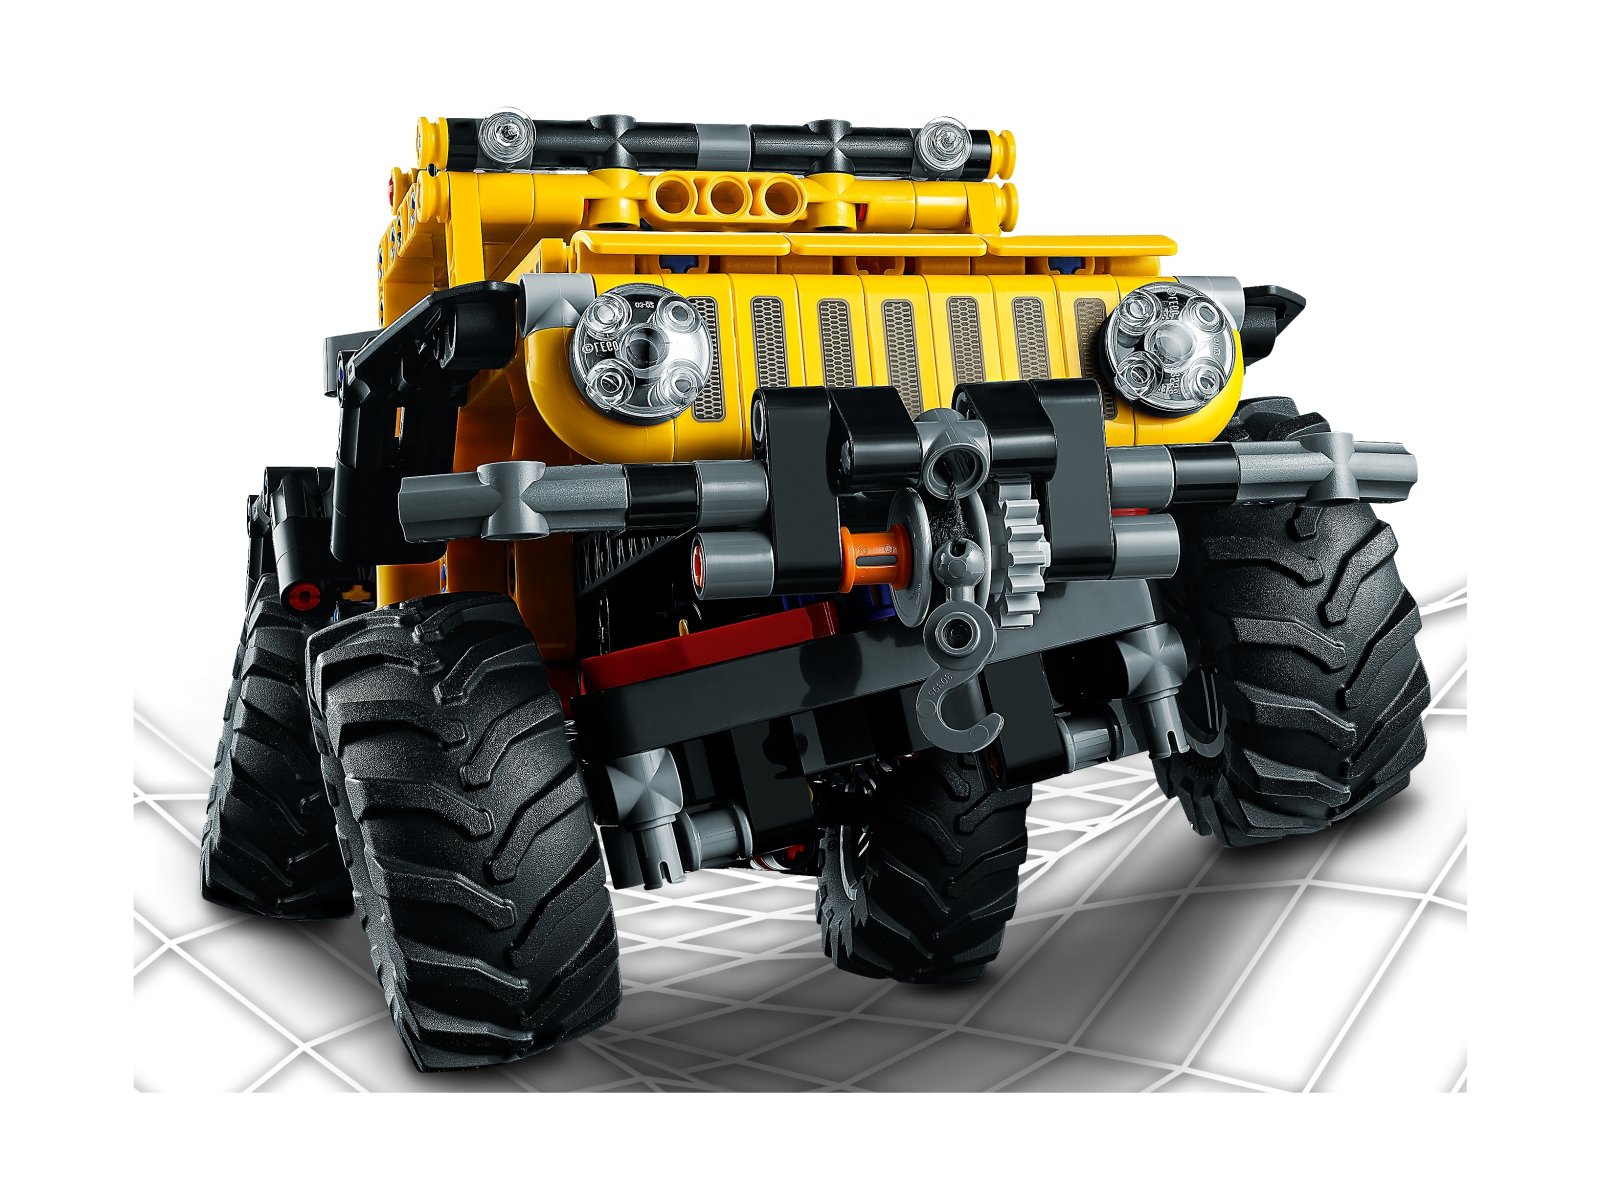 LEGO 42122 Jeep® Wrangler